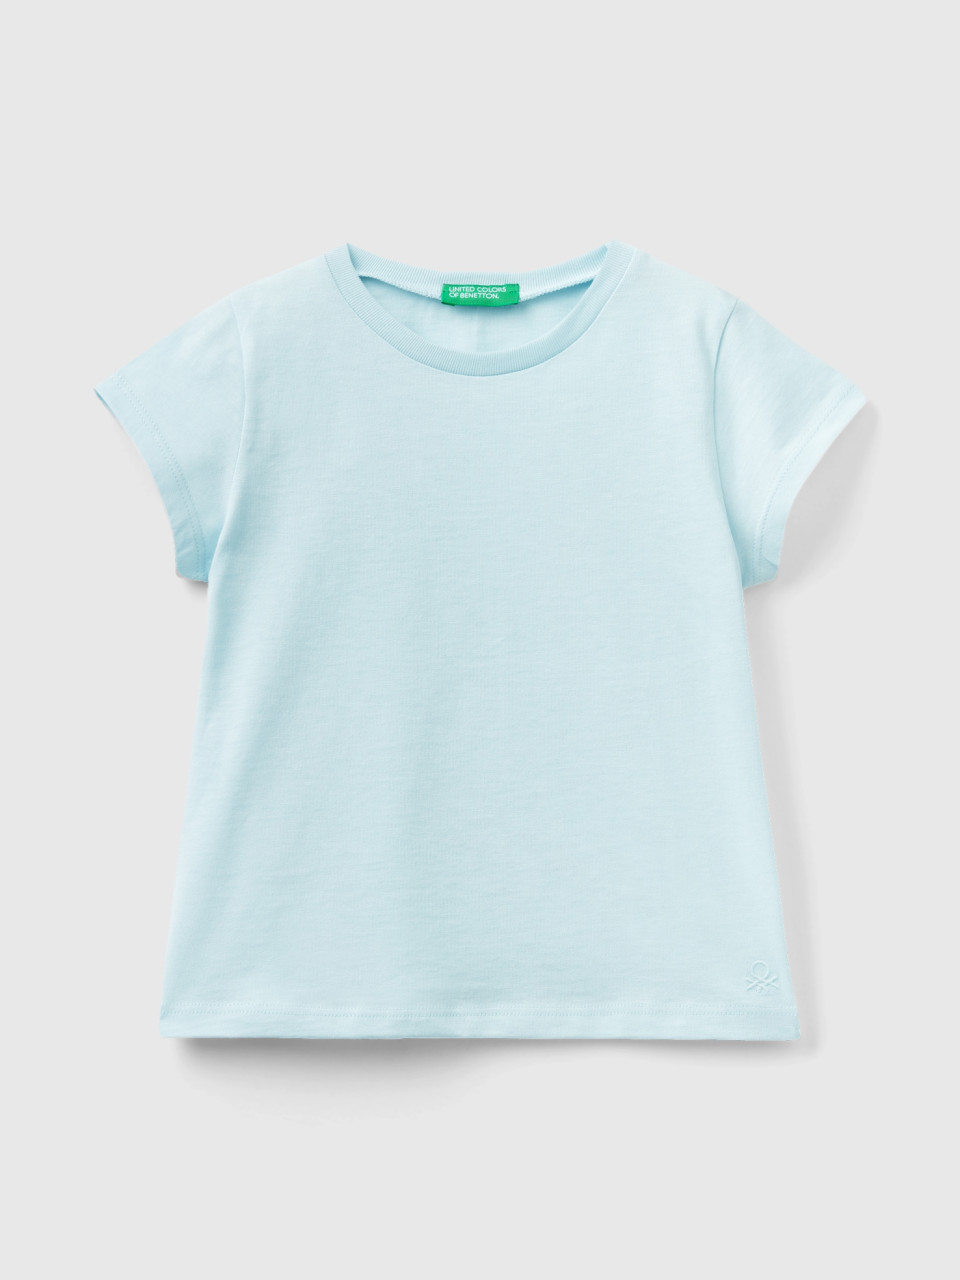 Benetton, 100% Organic Cotton T-shirt, Aqua, Kids